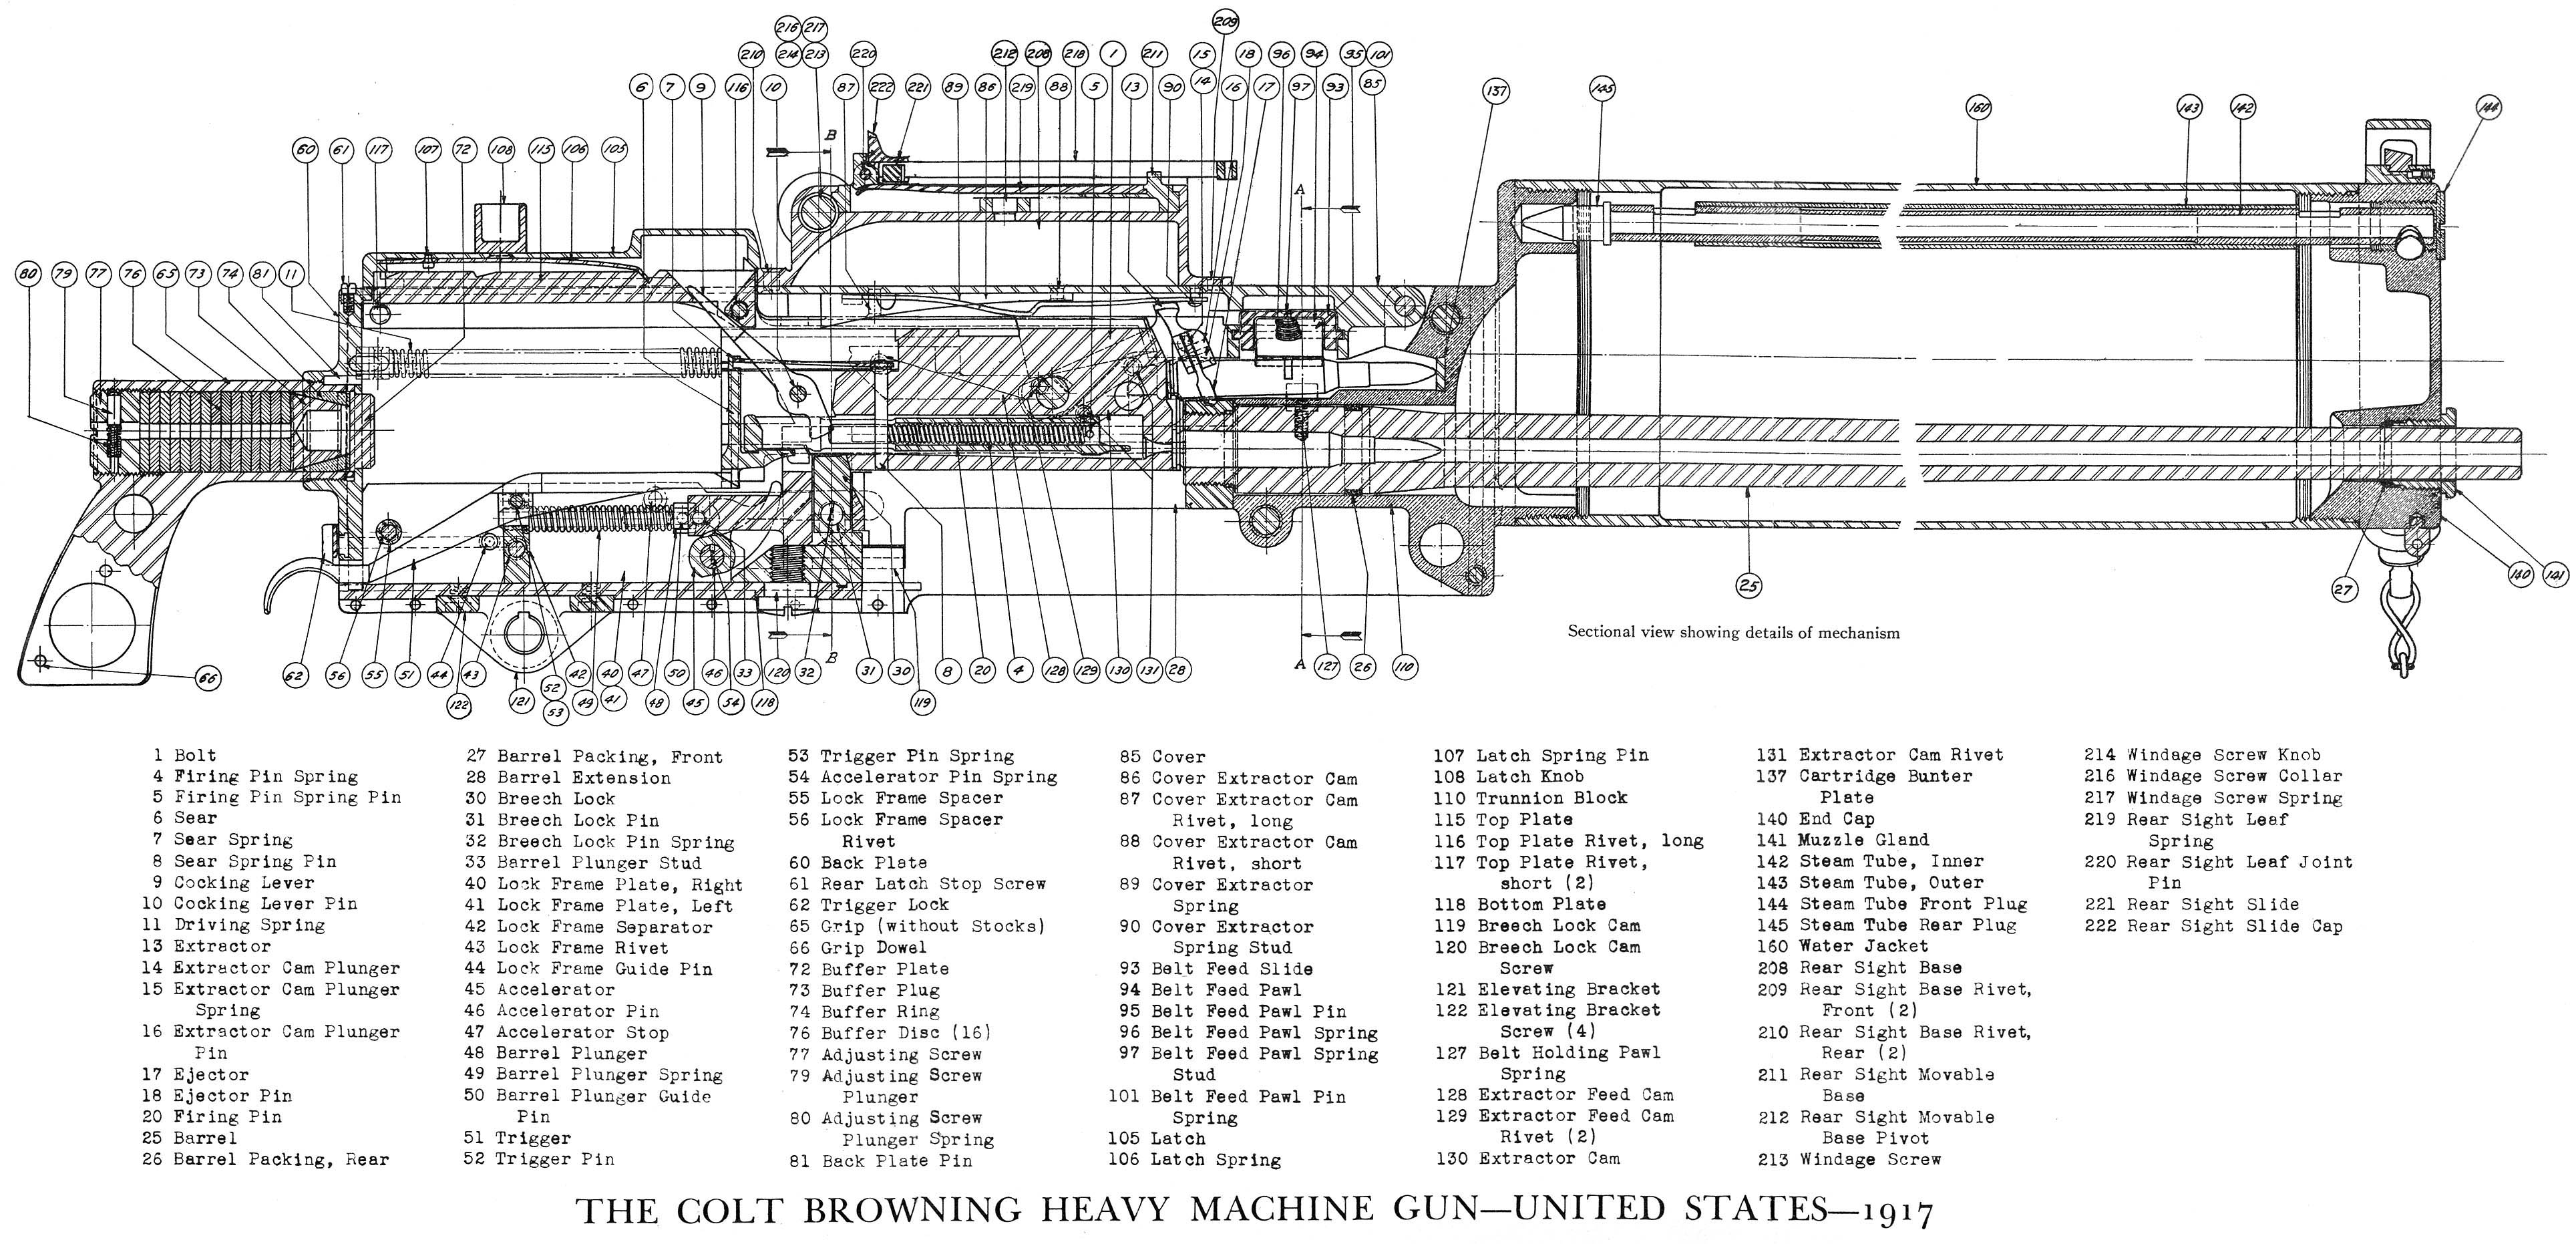 1 M1917 Colt-browning Heavy Machine Gun HD Wallpapers ... 47 quot lg scarlet tv wiring diagram 